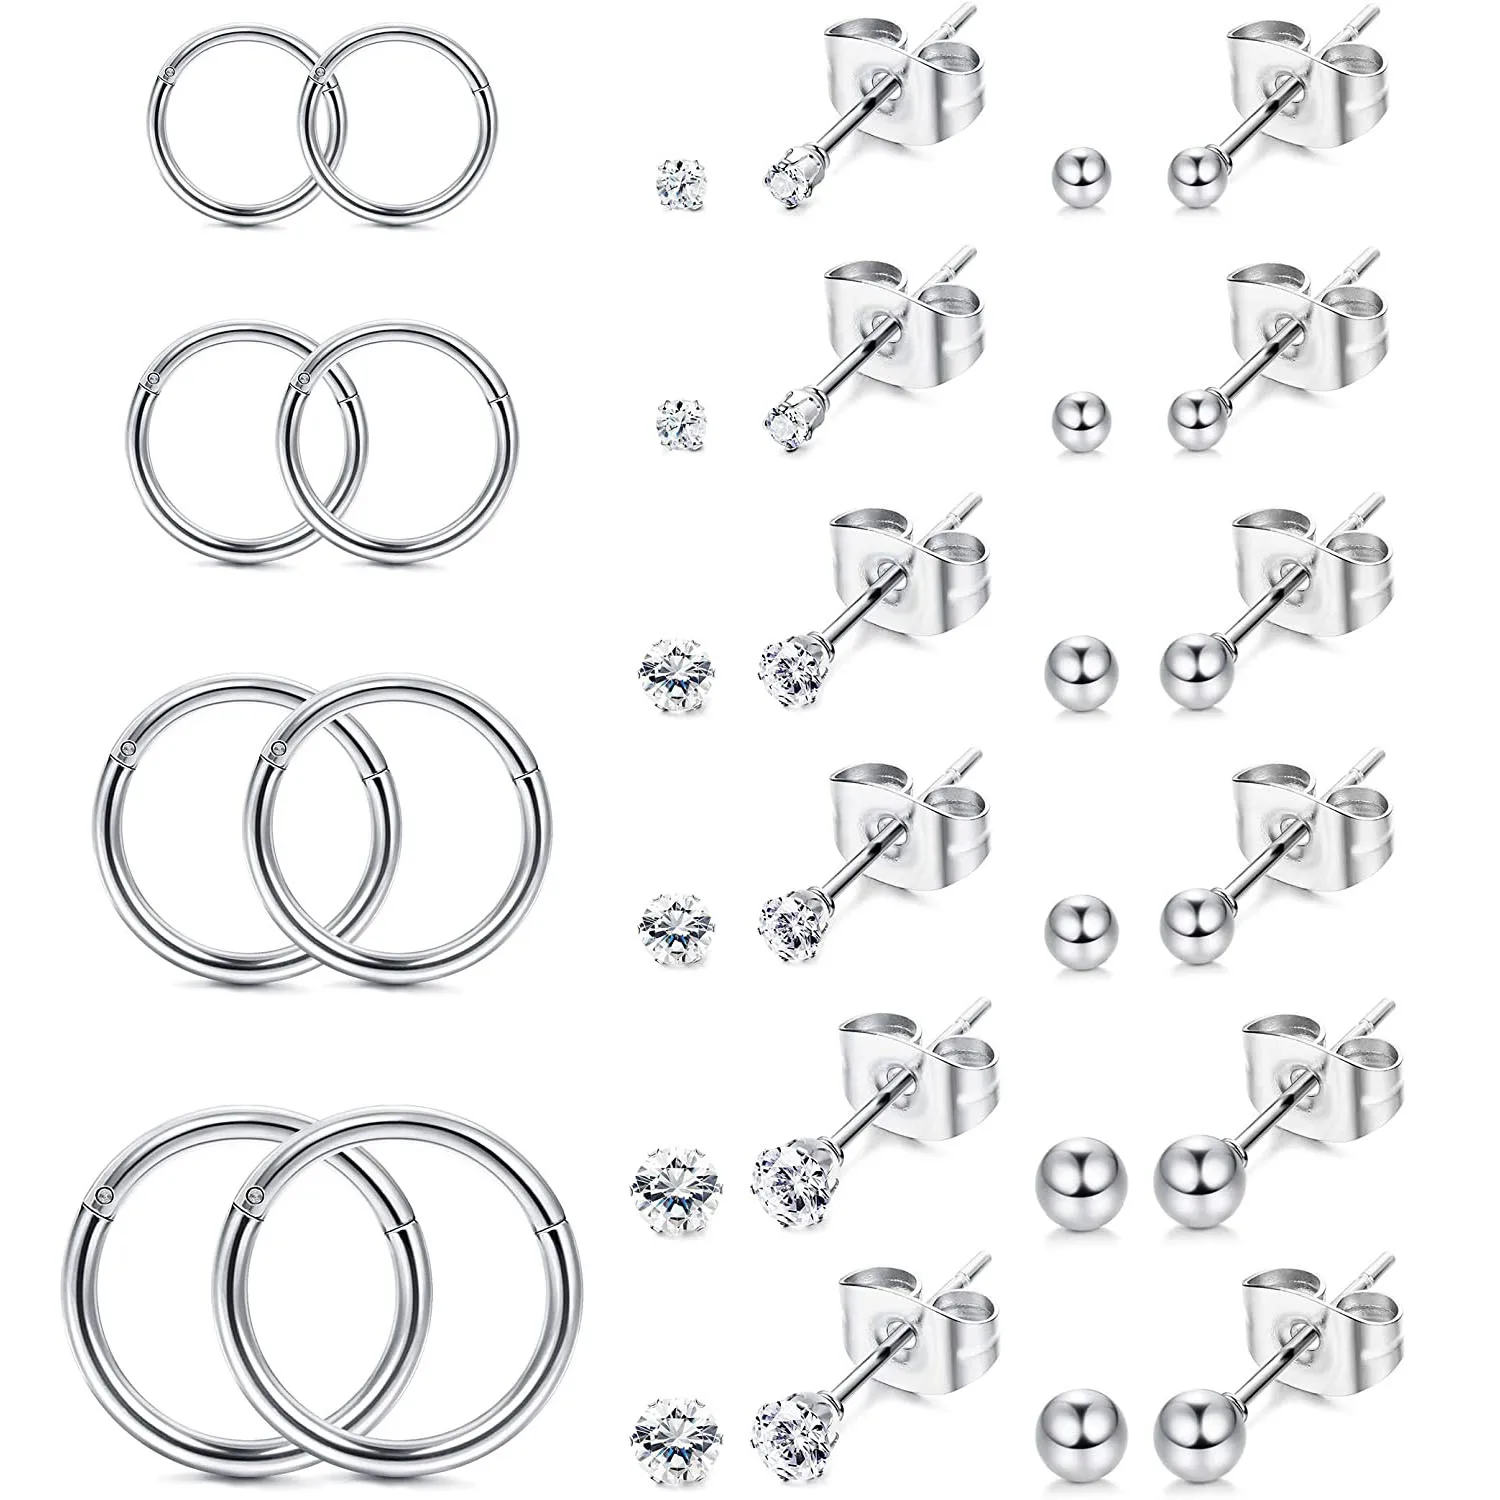 

WKOUD 1-16 Pairs Stainless Steel Ball CZ Stud Earrings Cartilage Helix Conch Daith Ear Piercing Jewelry Set for Men Women